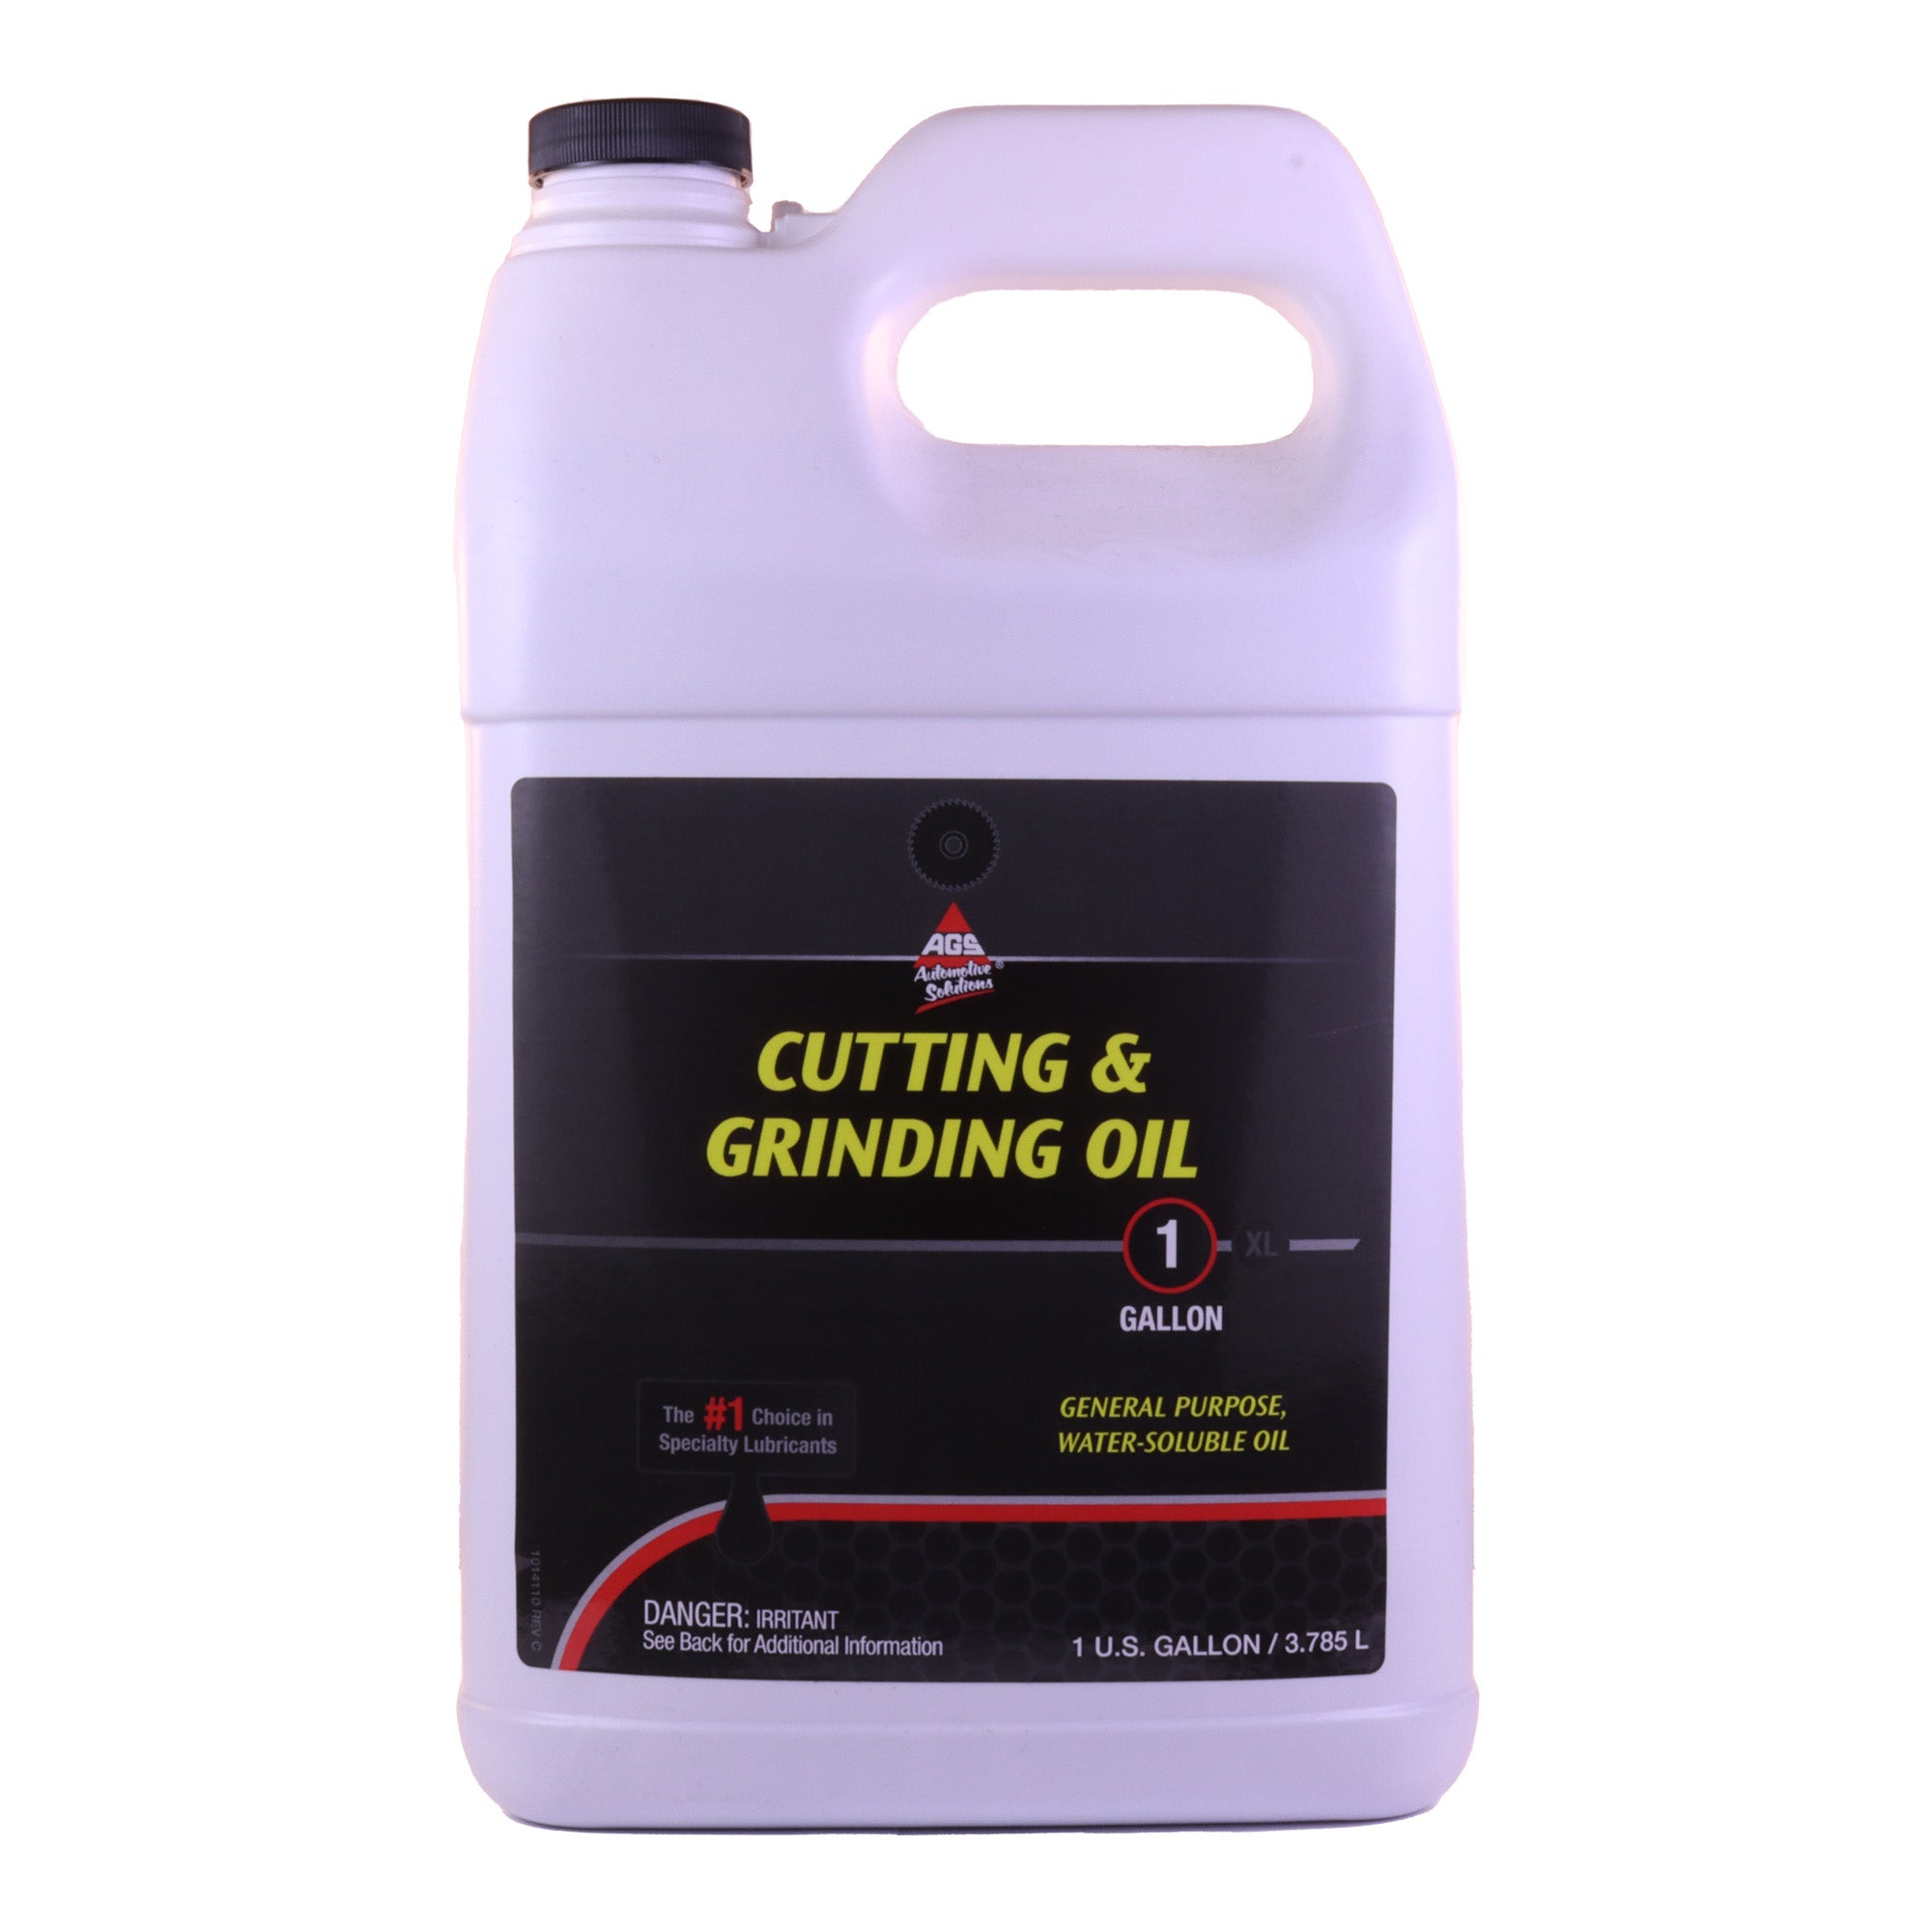 Cutting Oil - GAI - 4 oz bottle